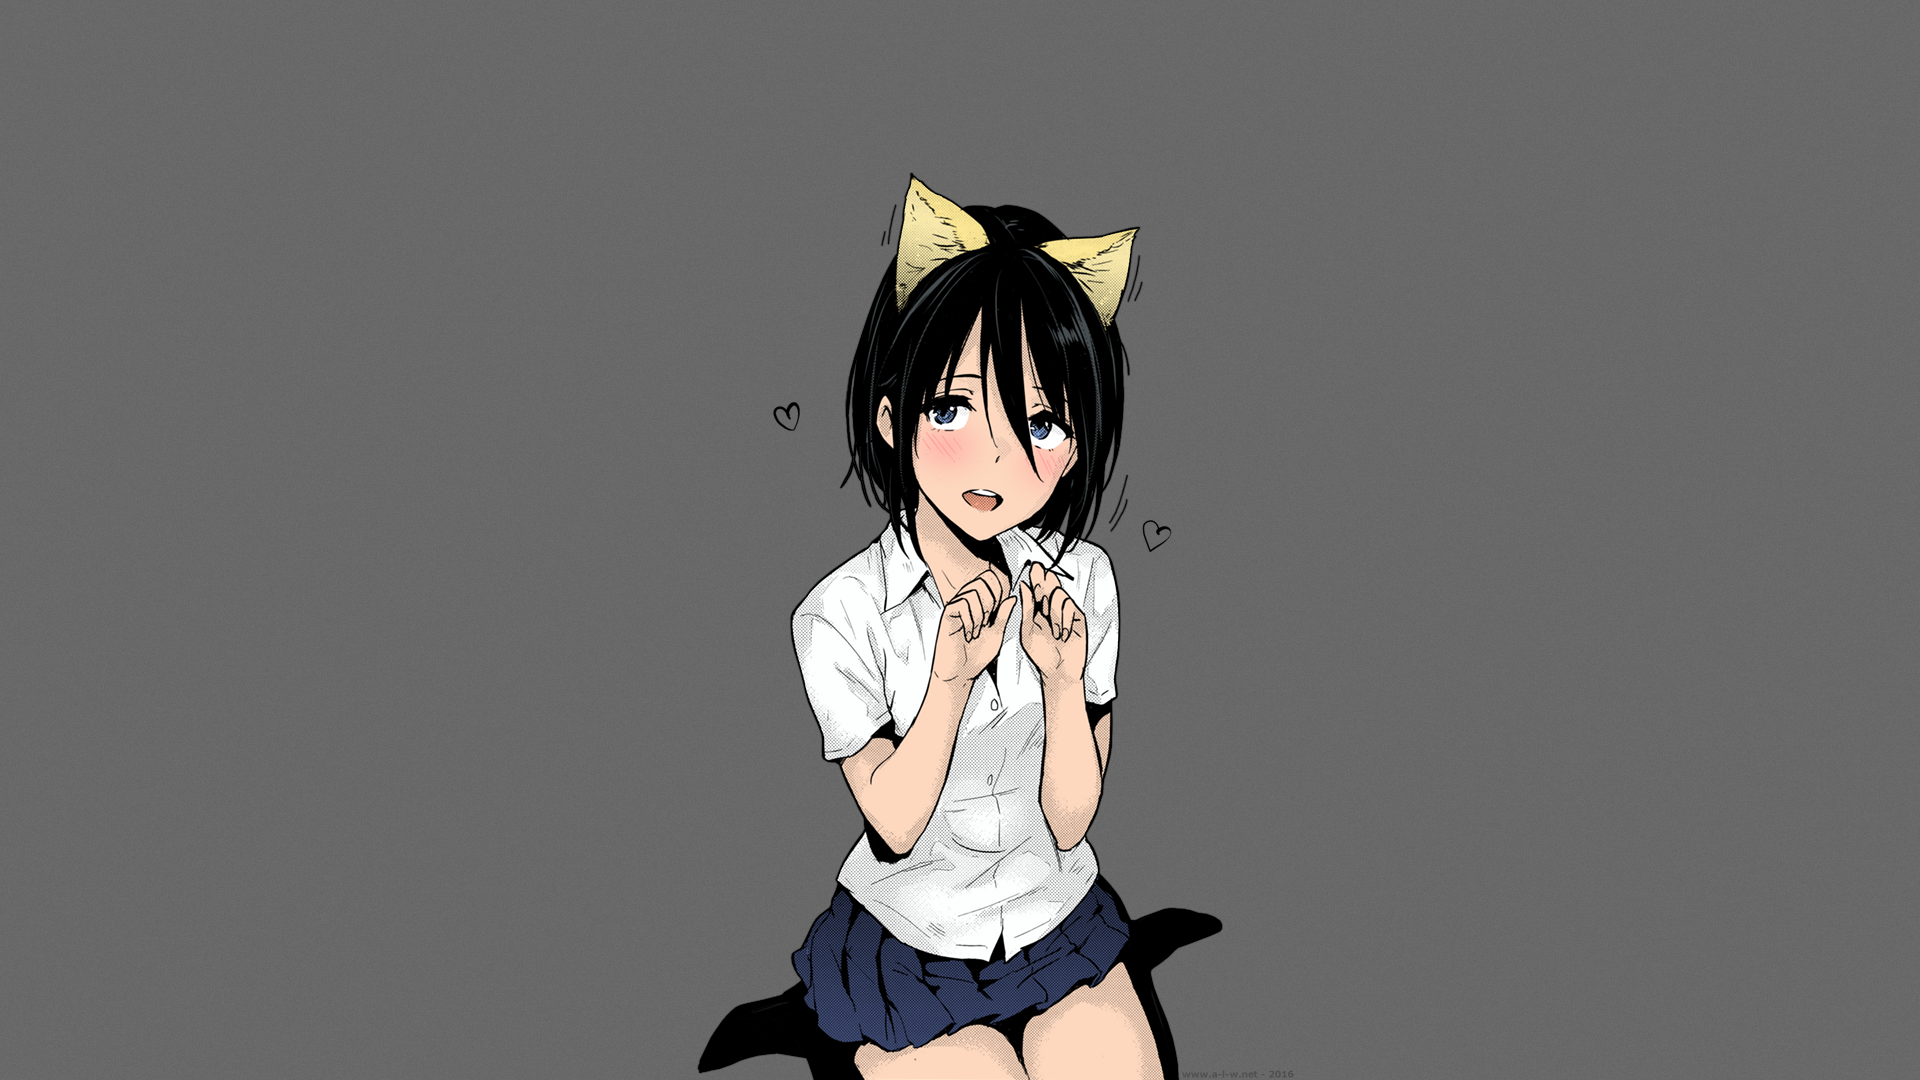 Desktop Wallpaper Cute Black Short Hair Anime Girl, HD Image, Picture, Background, Tj1ih9